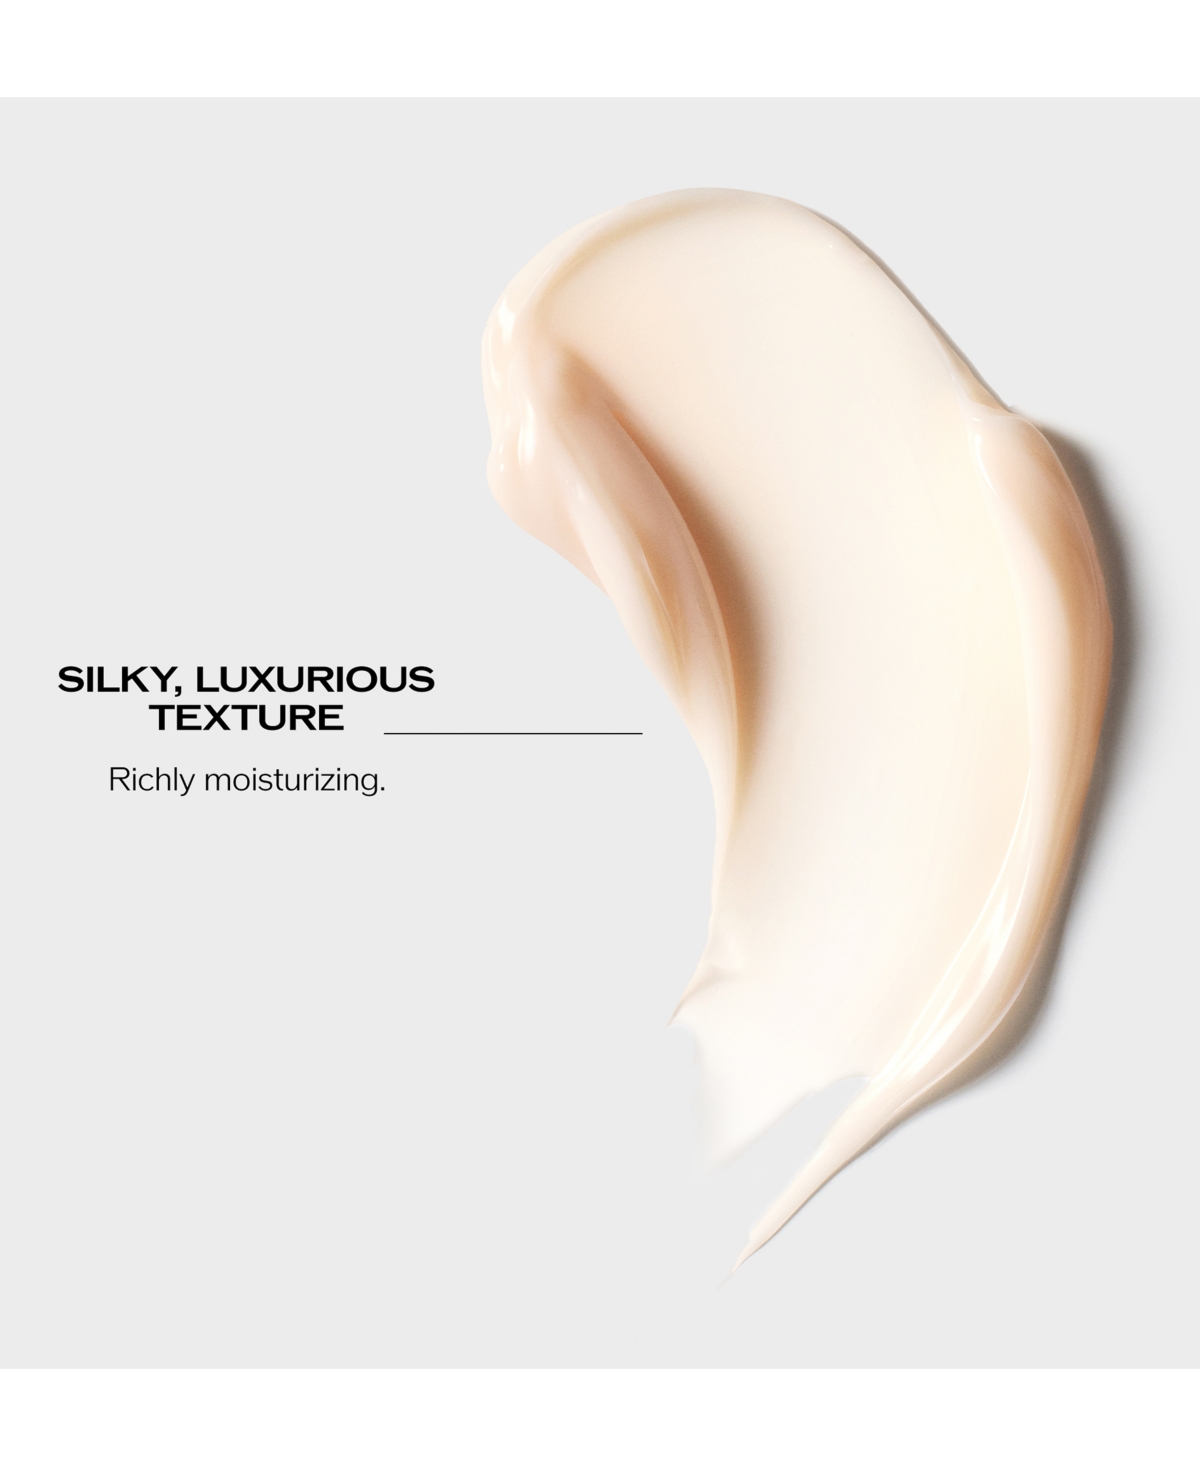 Shop Shiseido Vital Perfection Uplifting & Firming Advanced Cream Refill, 1.7 Oz. In No Color